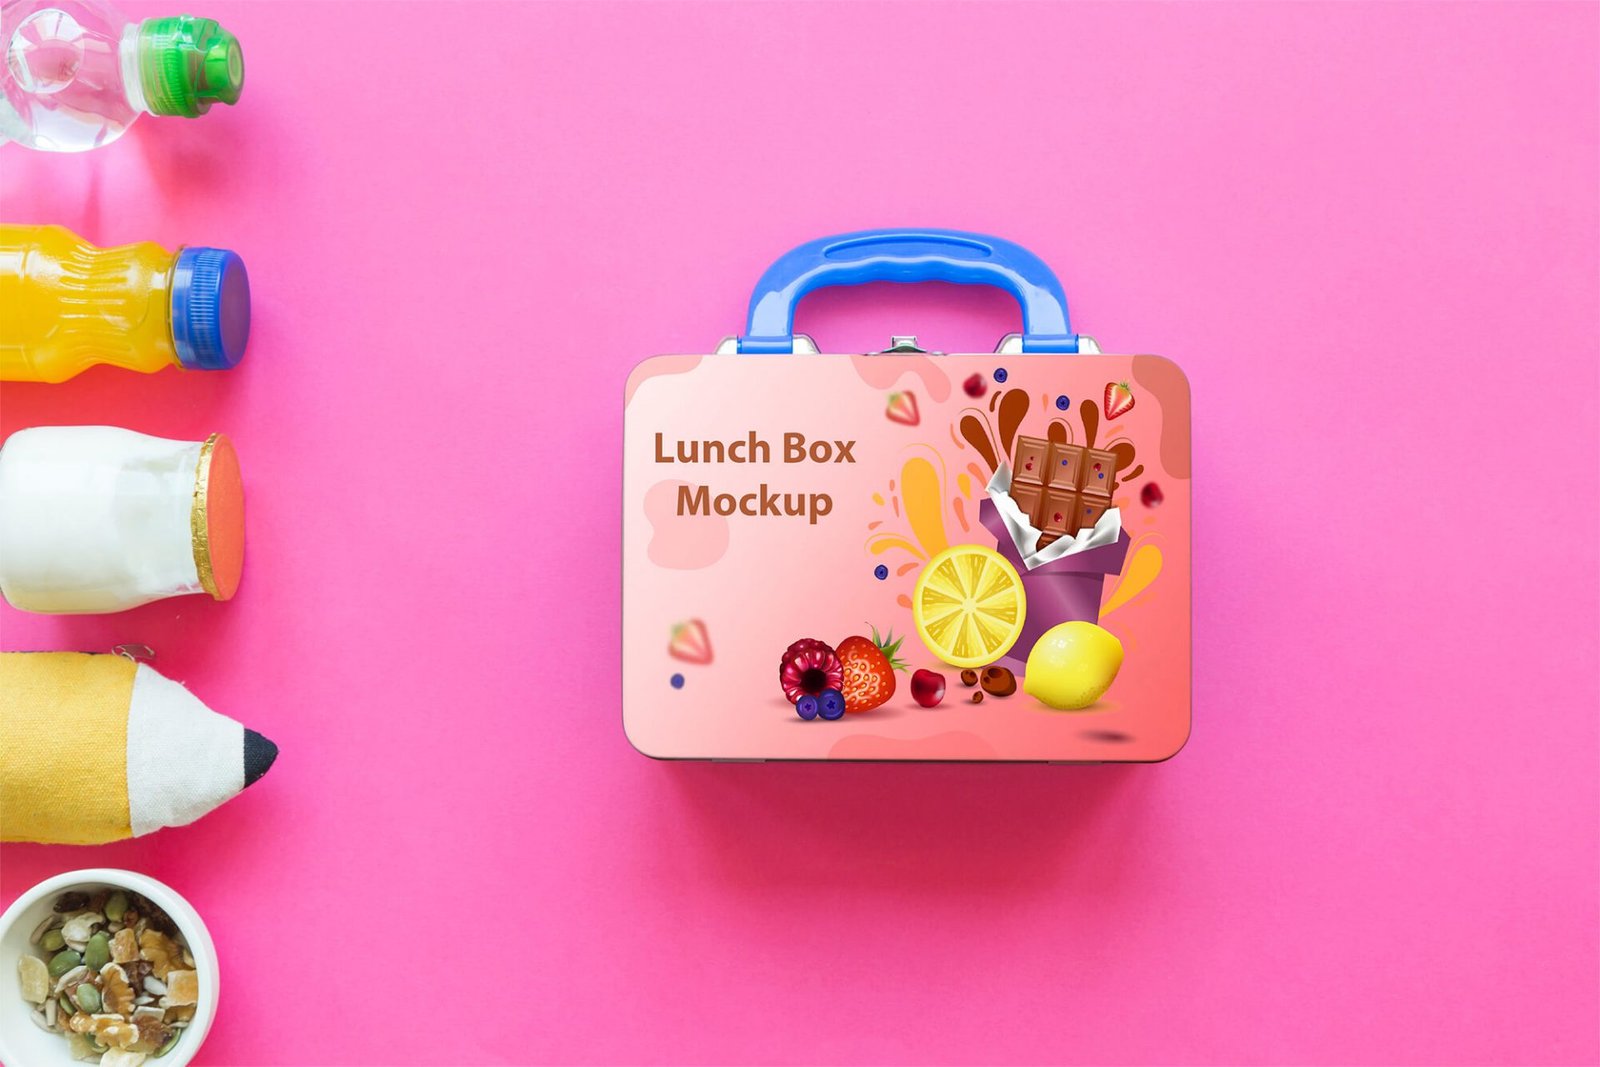 Lunch Box Mockup | 23+ Free Creative Lunch Box PSD & Vector